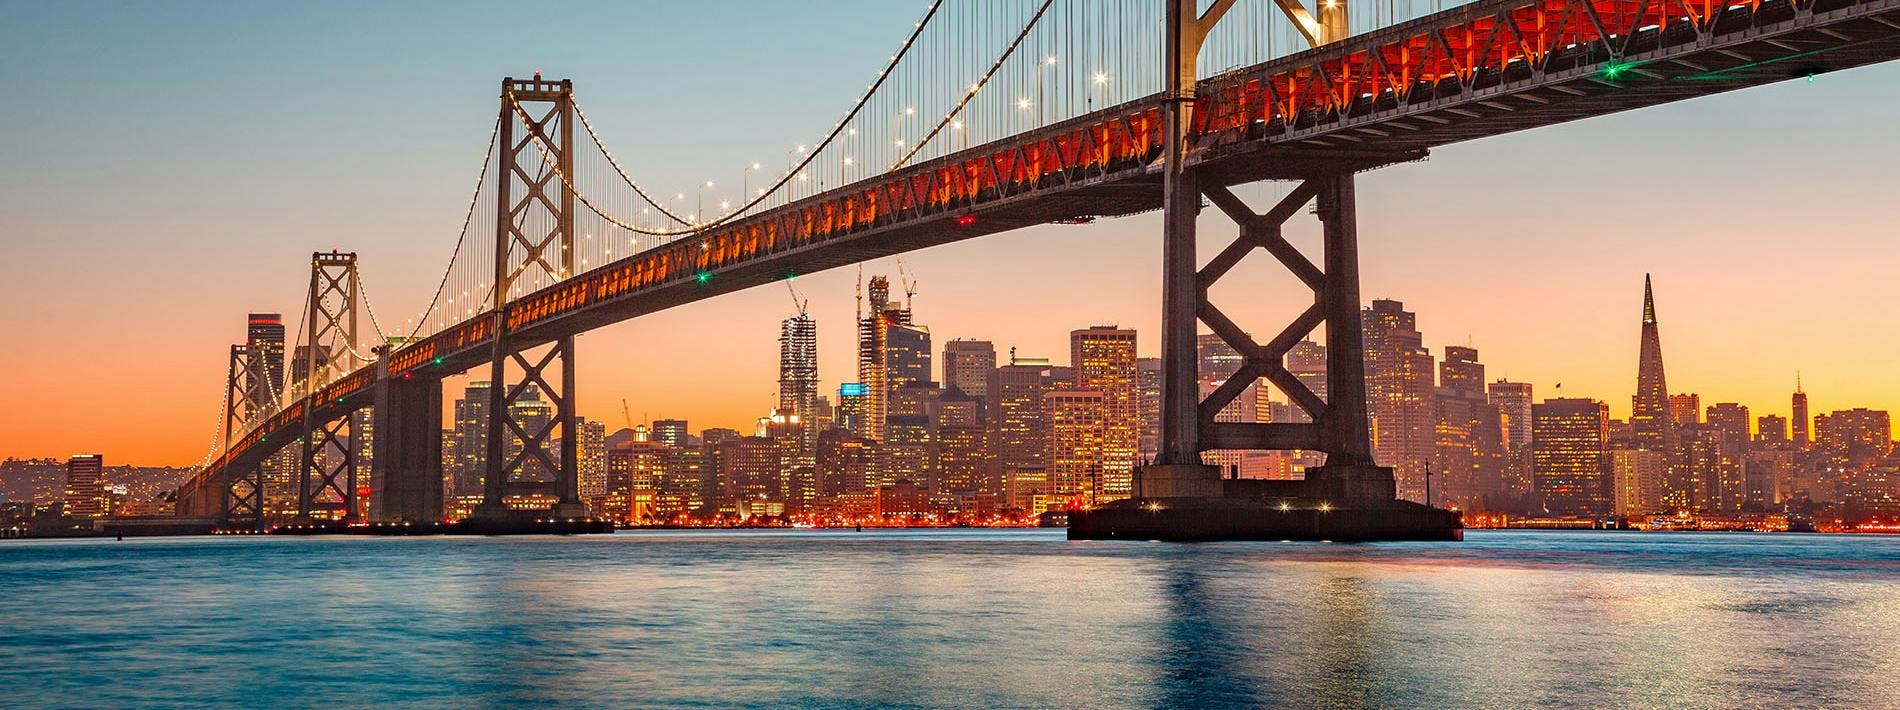 San Francisco Water Quality Bridge Photo